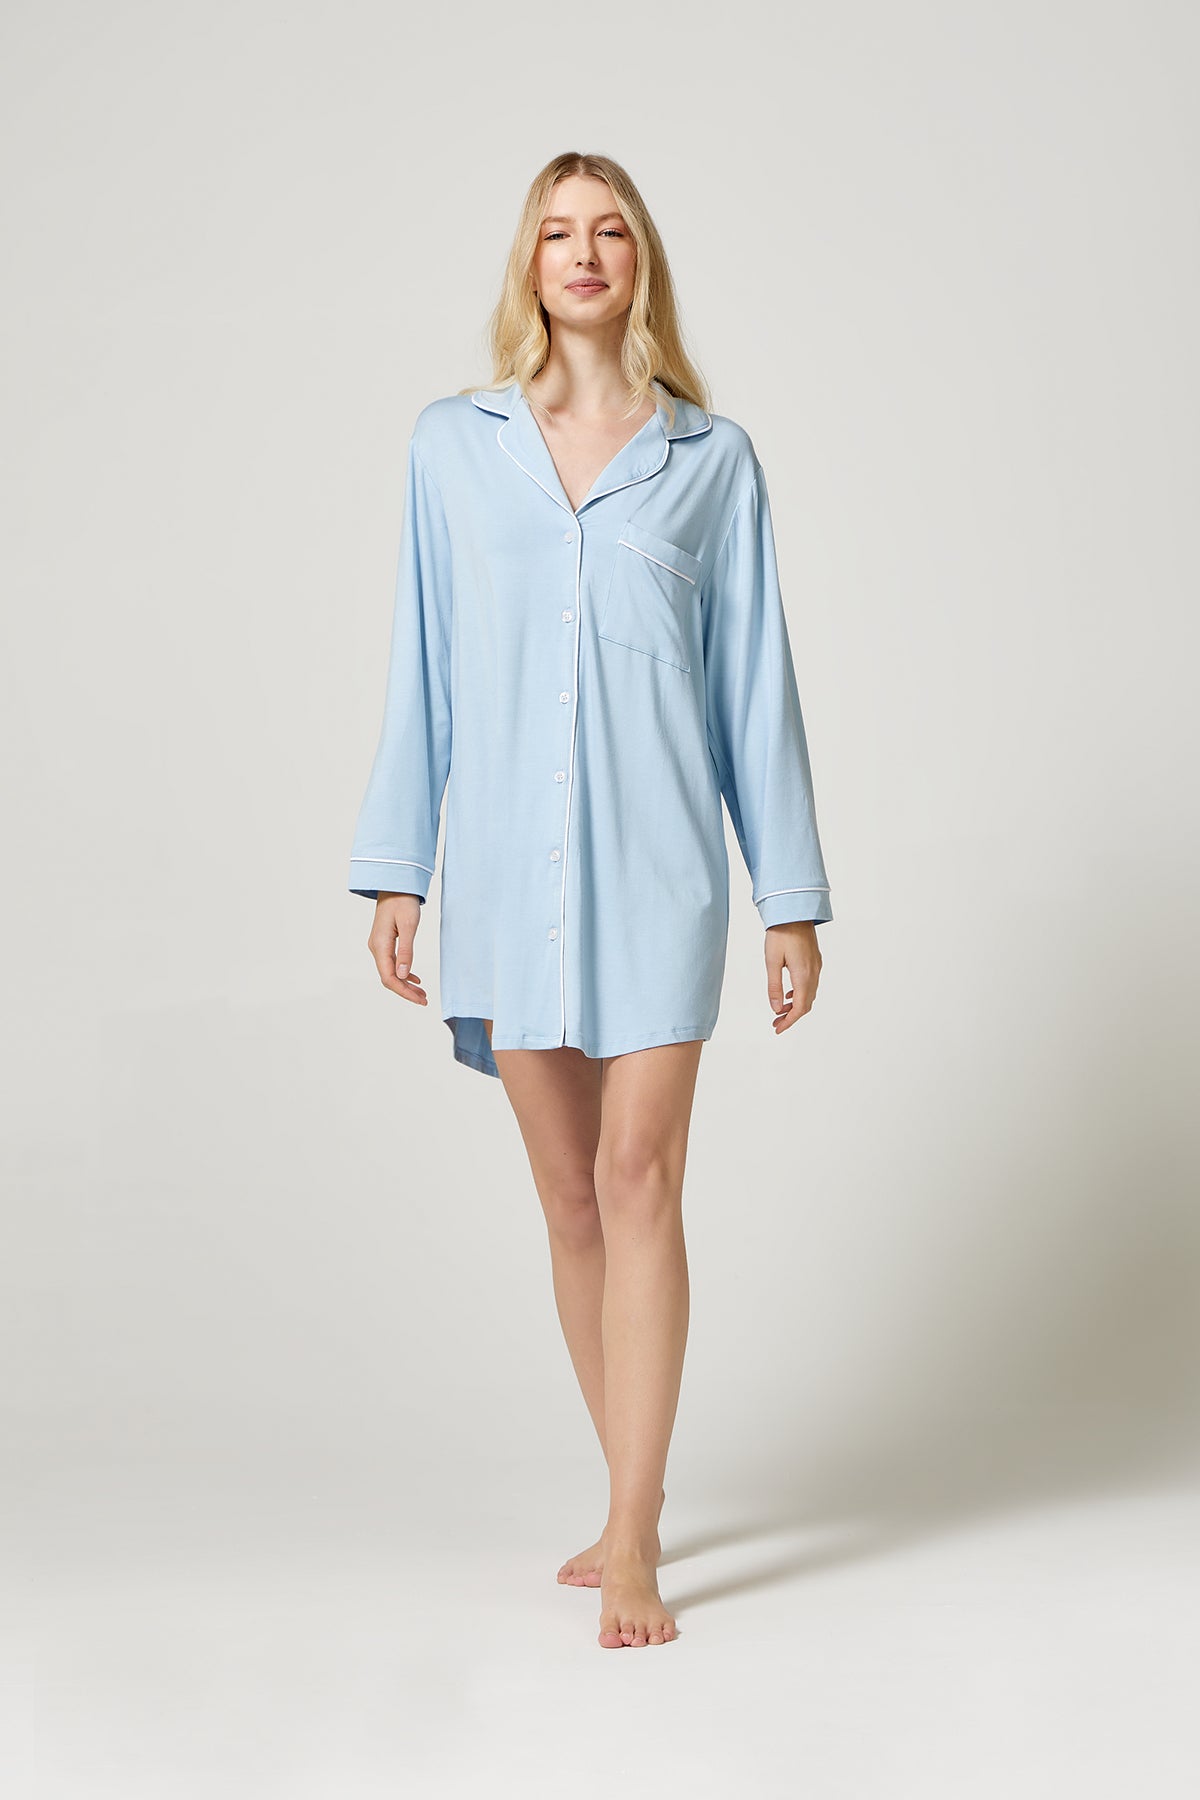 The Night Shirt Light Blue - Sleepwear - POCO by Pippa